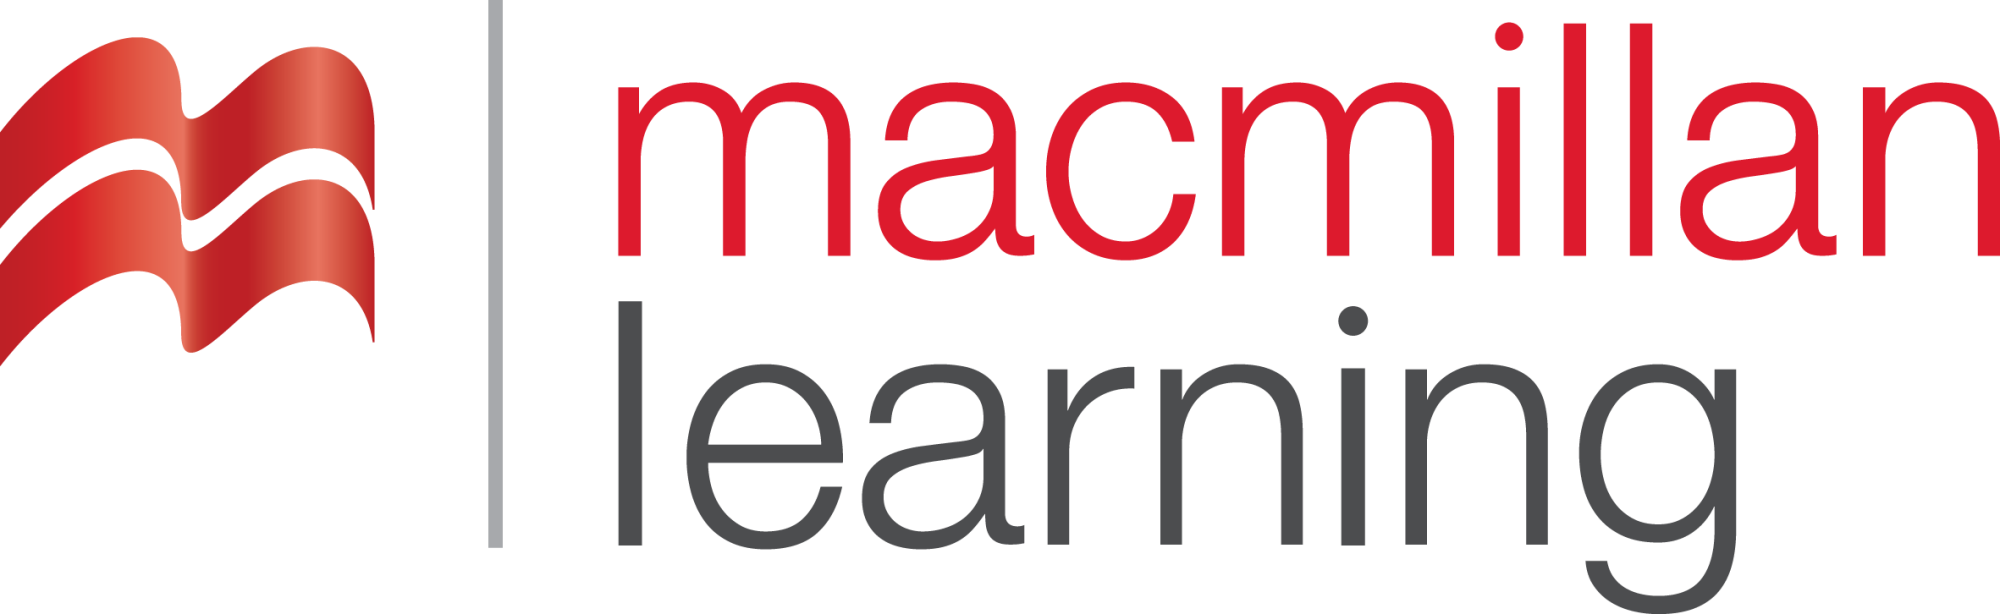 Macmillan Learning logo